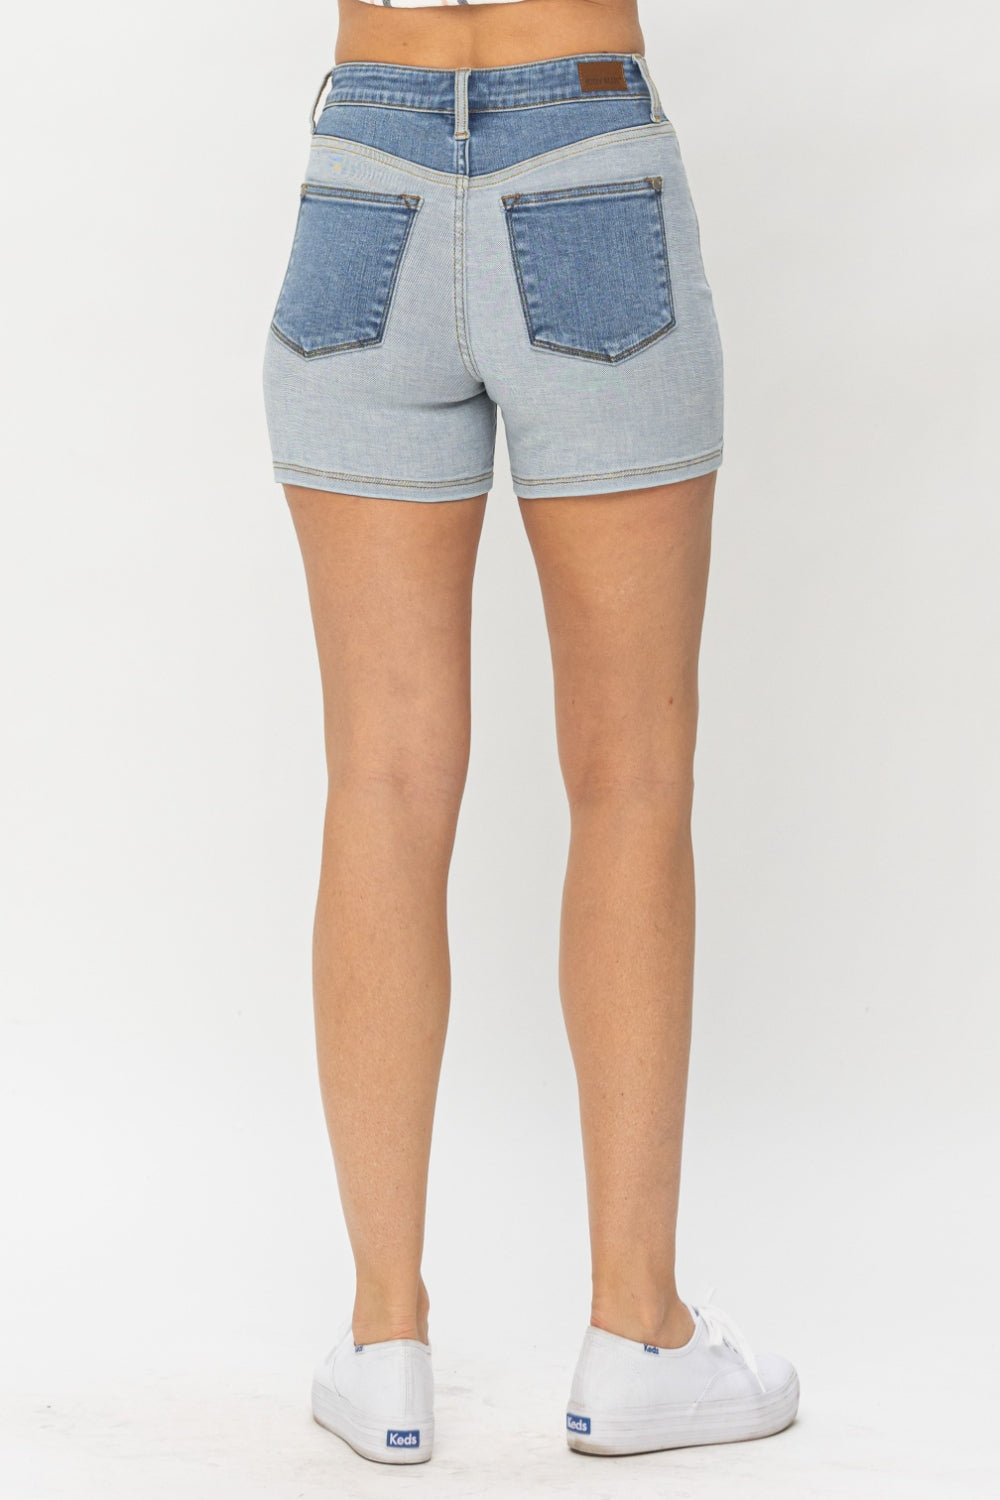 Judy Blue Full Size Color Block Denim Shorts - Denim Shorts - FITGGINS